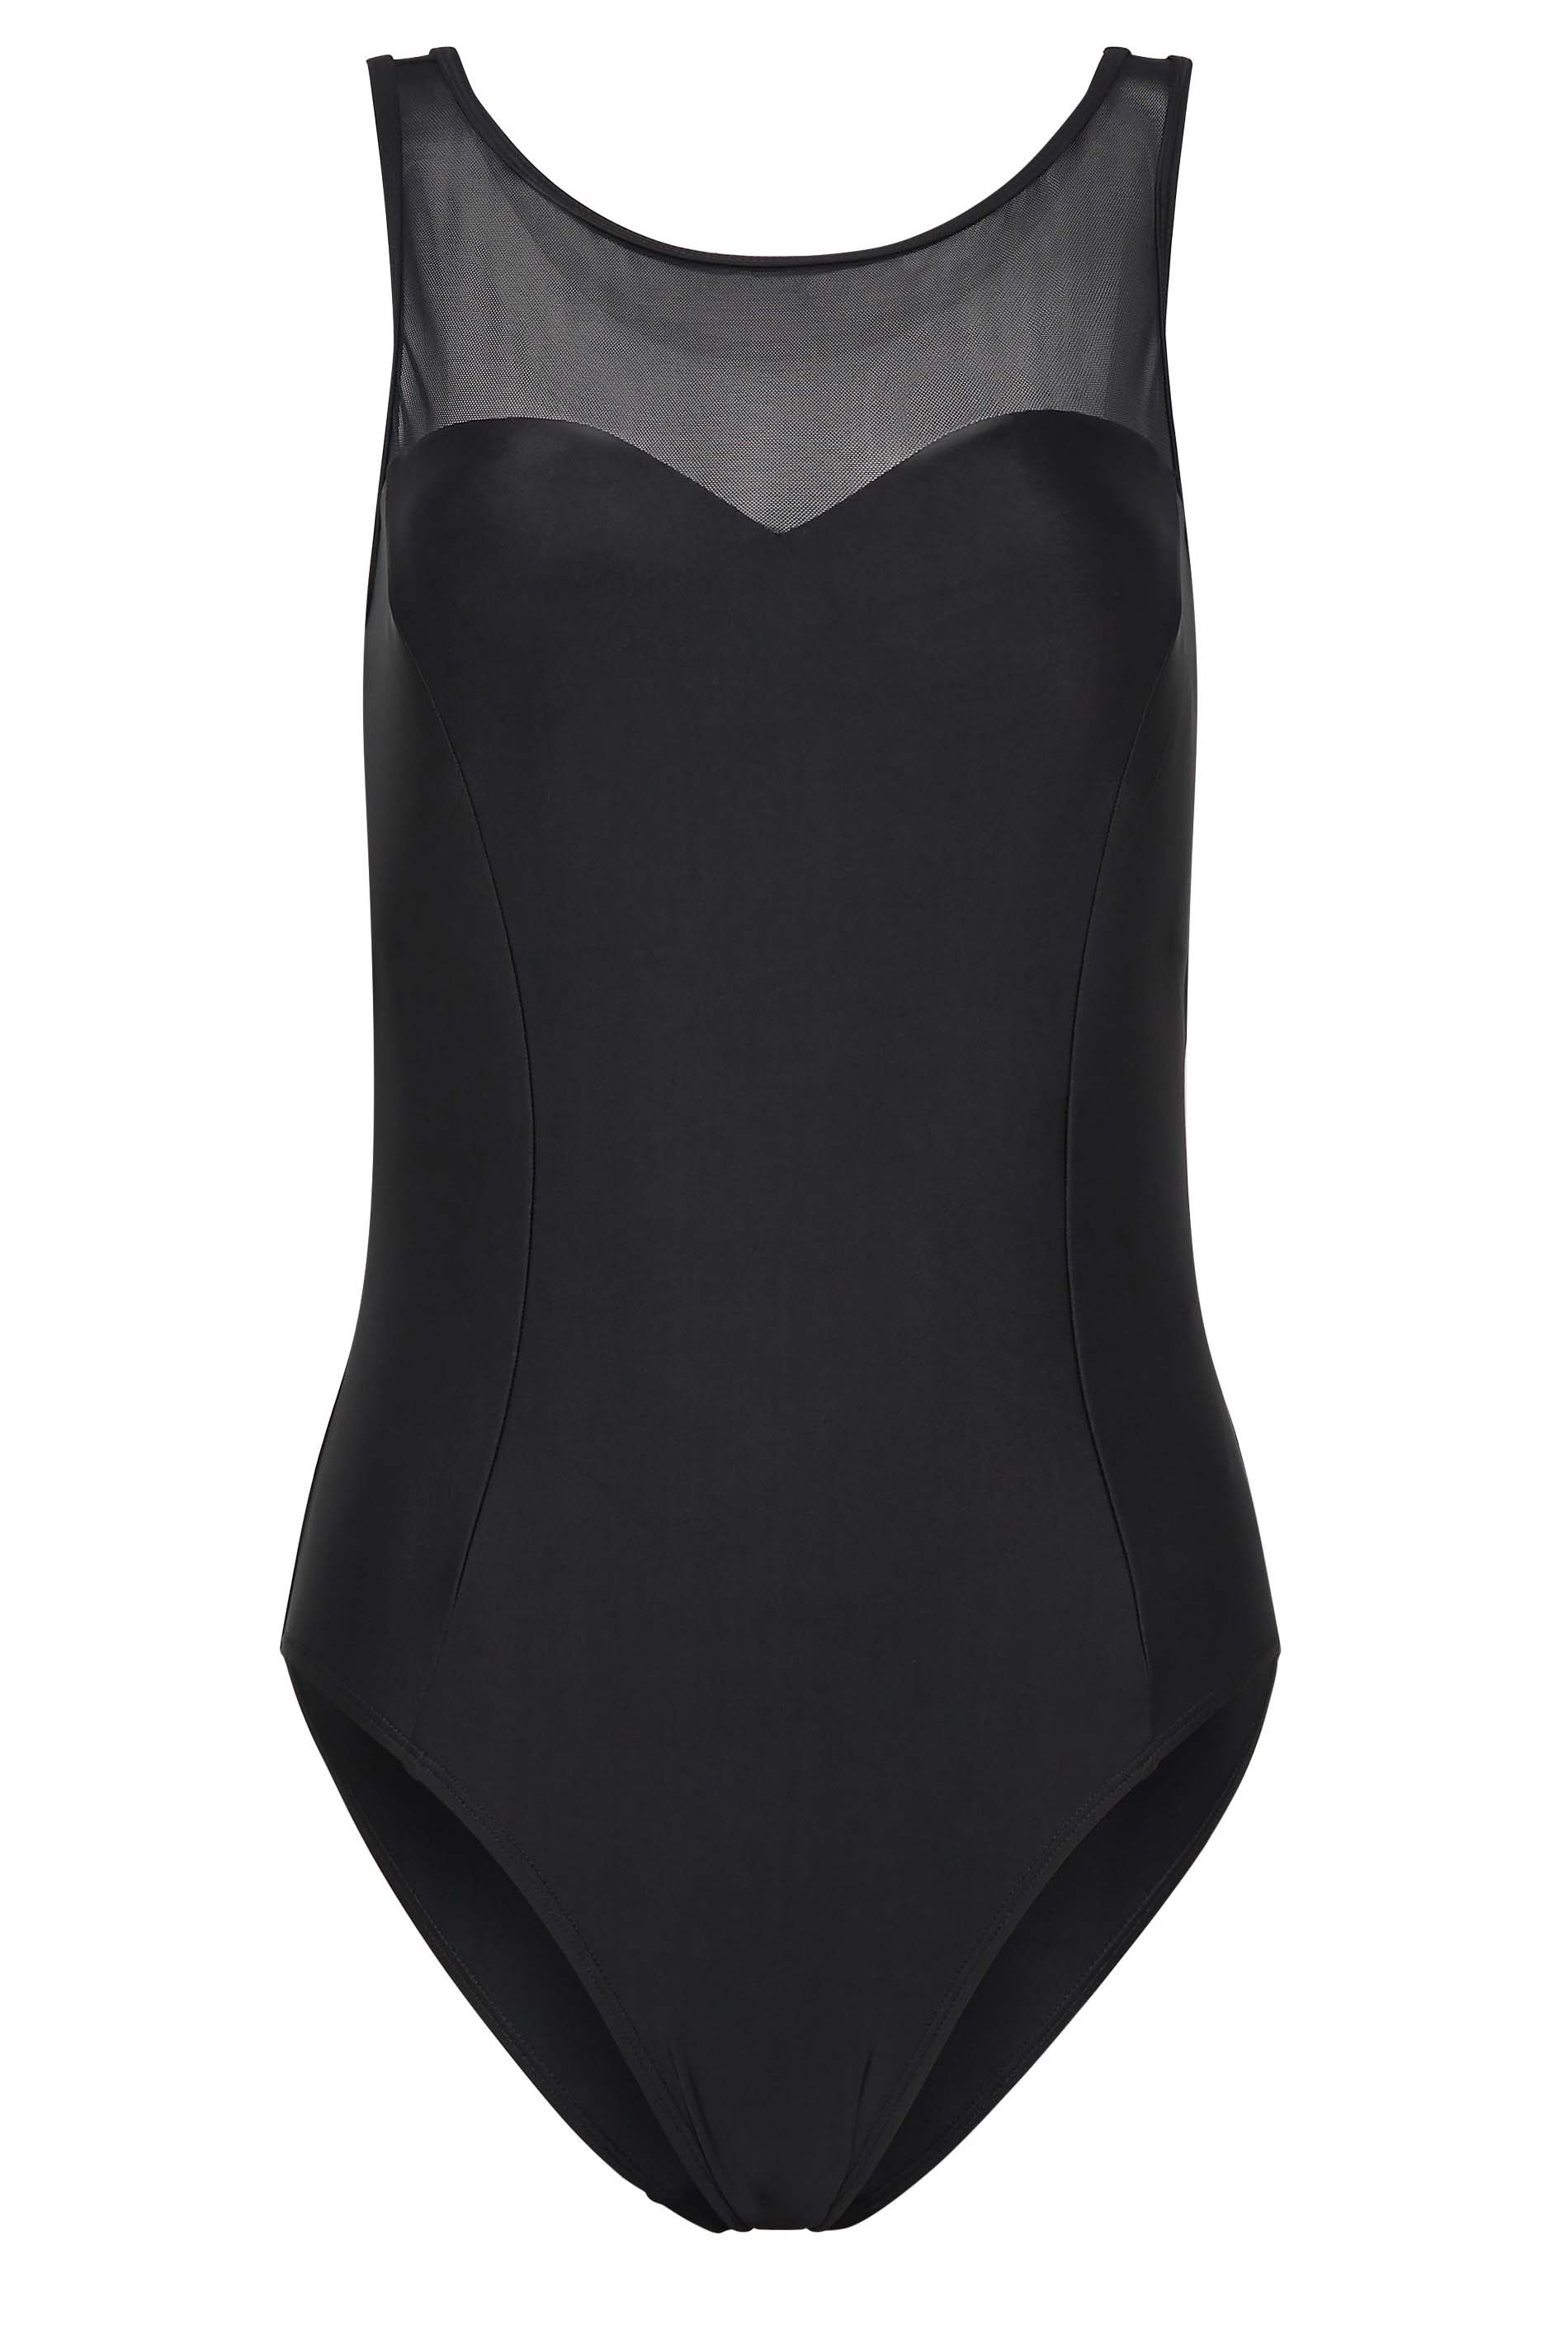 YOURS PETITE Plus Size Black Mesh Contour Swimsuit | Yours Clothing 1